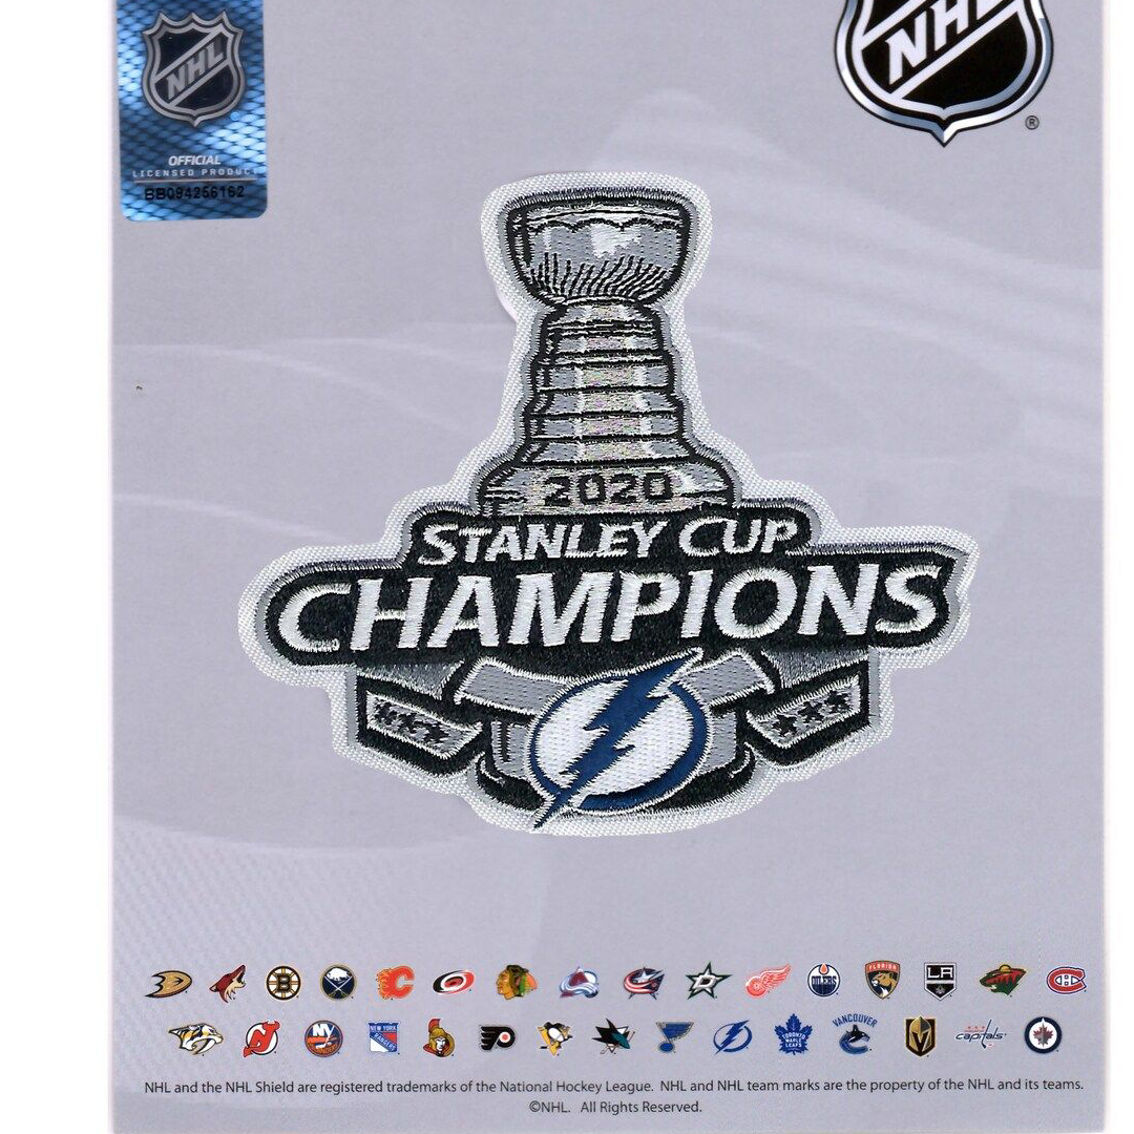 Tampa Bay Lightning Alternate Logo - National Hockey League (NHL